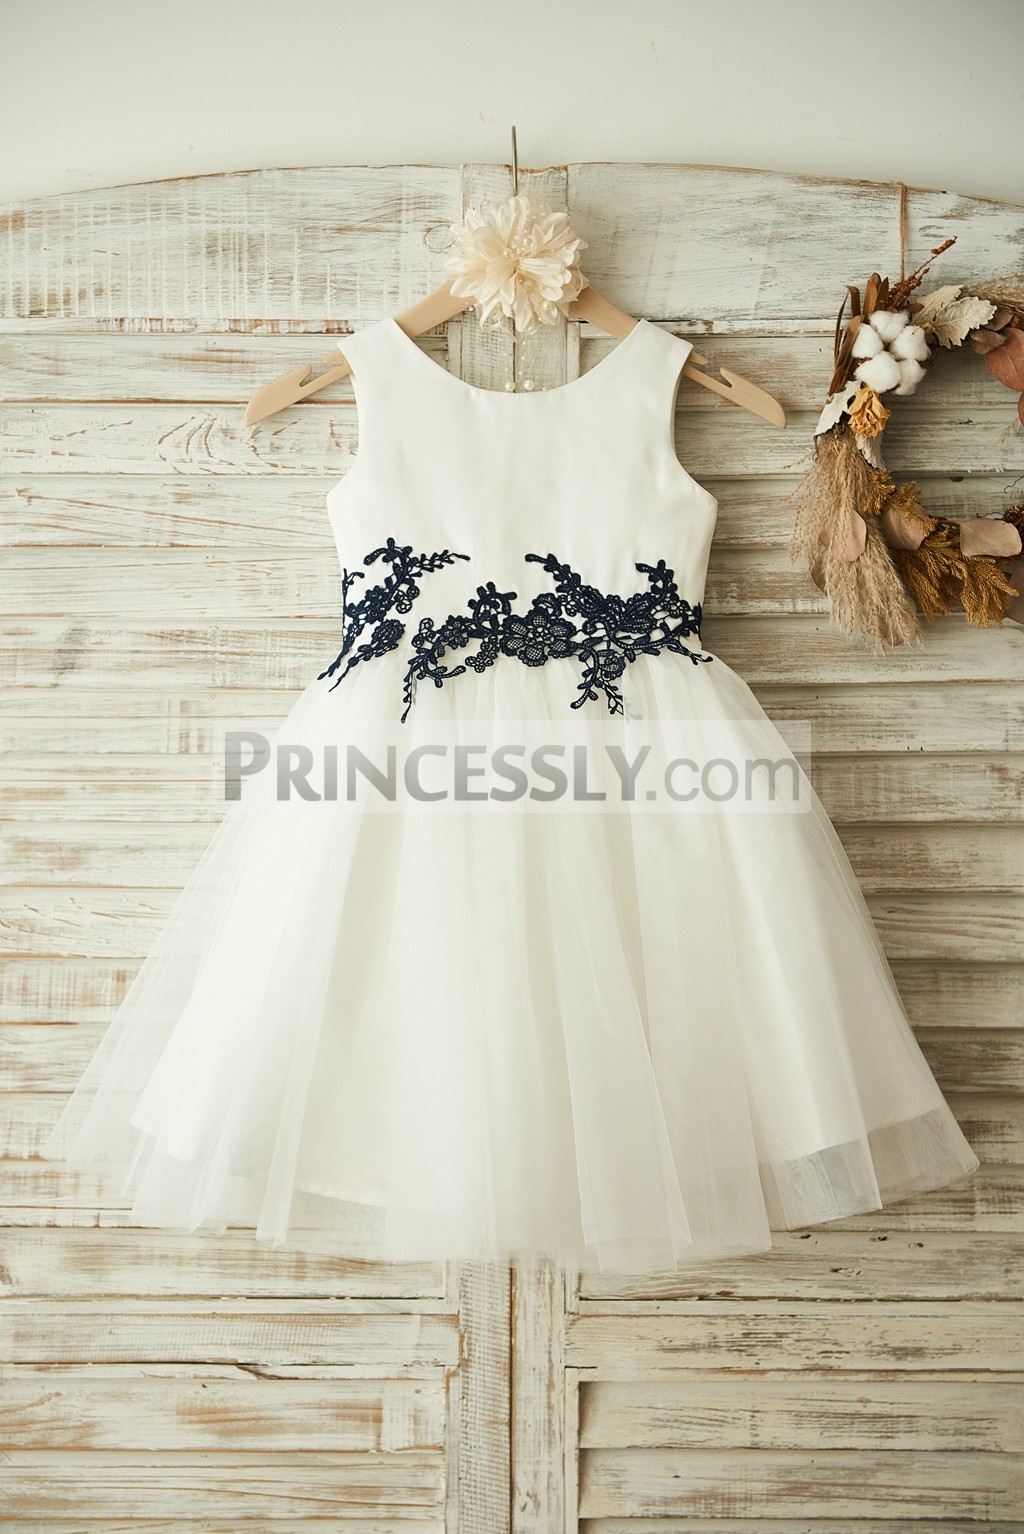 Princessly.com-K1003375-Ivory Satin Tulle Black Lace Wedding Flower Girl Dress-31